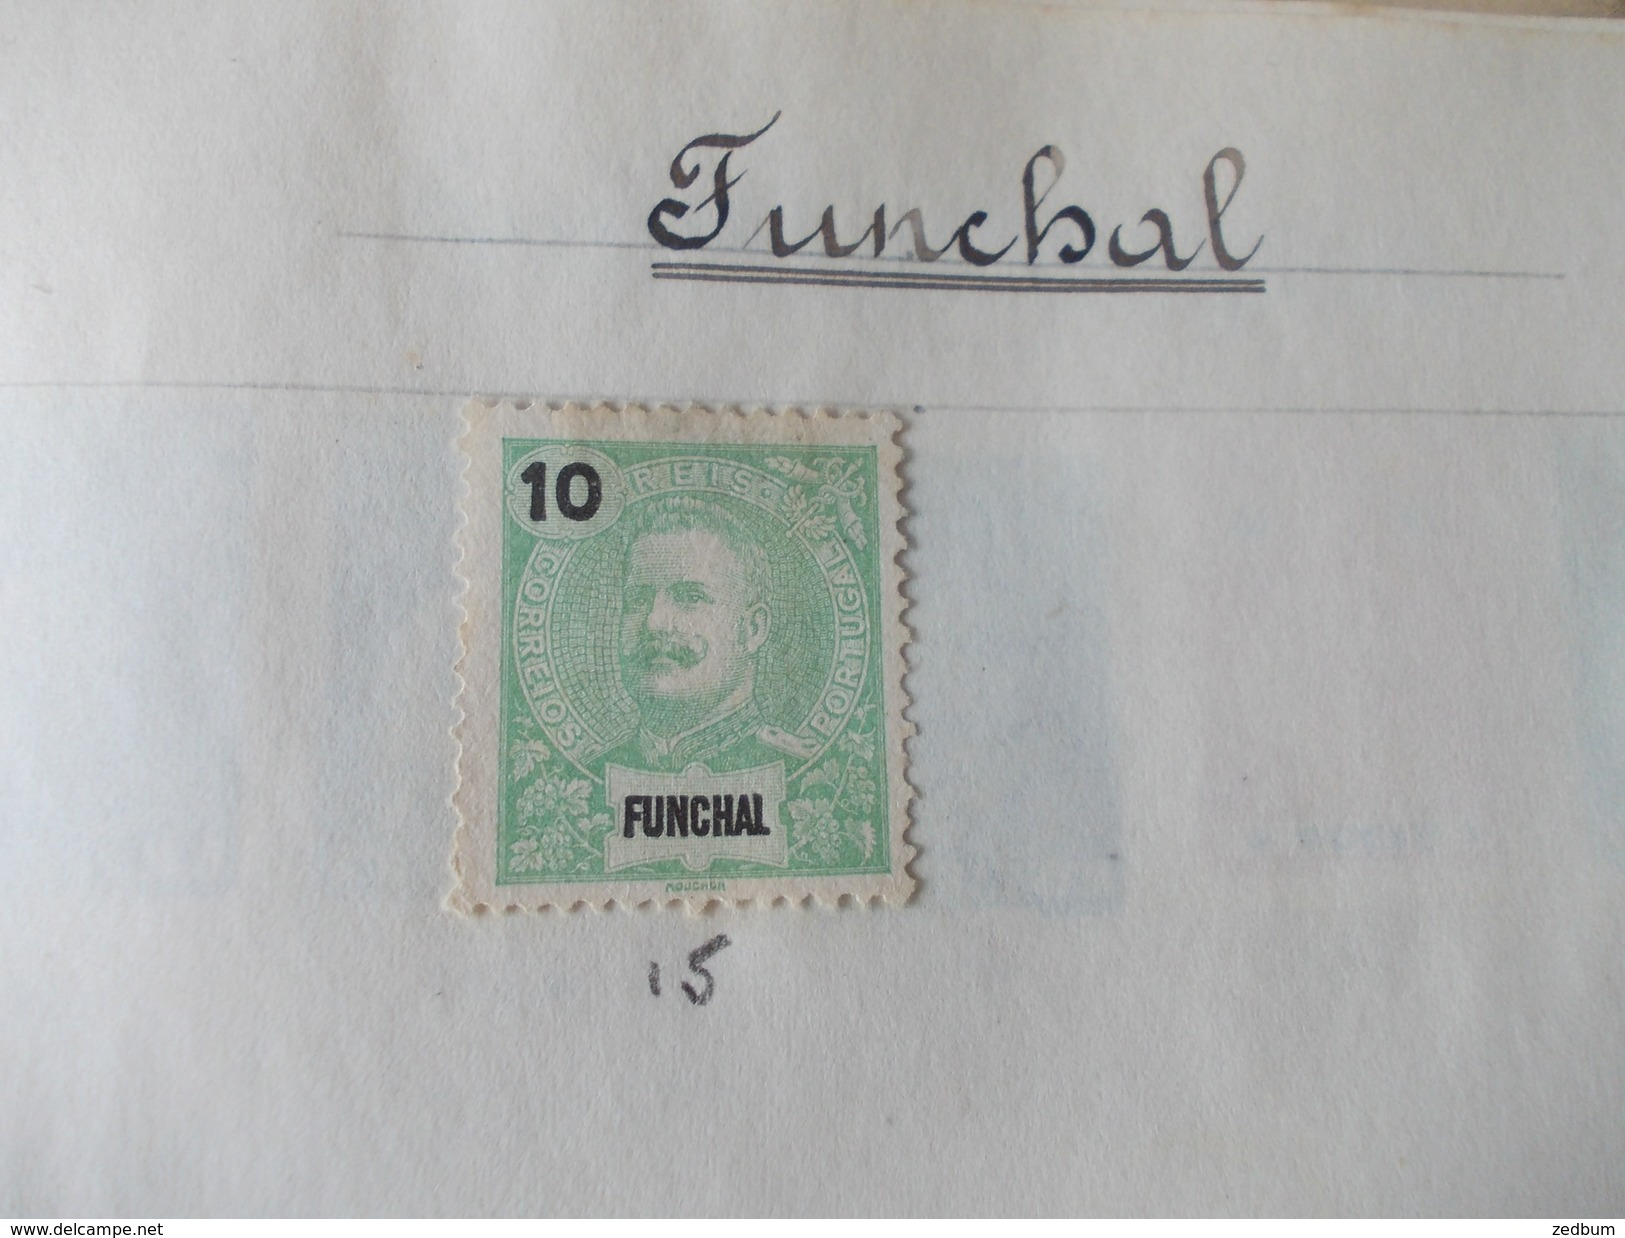 TIMBRE 5 Pages Funchal Guinée Portugaise Inde Hyderabad Hong Kong 12 Timbres Valeur 3.55 &euro; - Guinée Portugaise